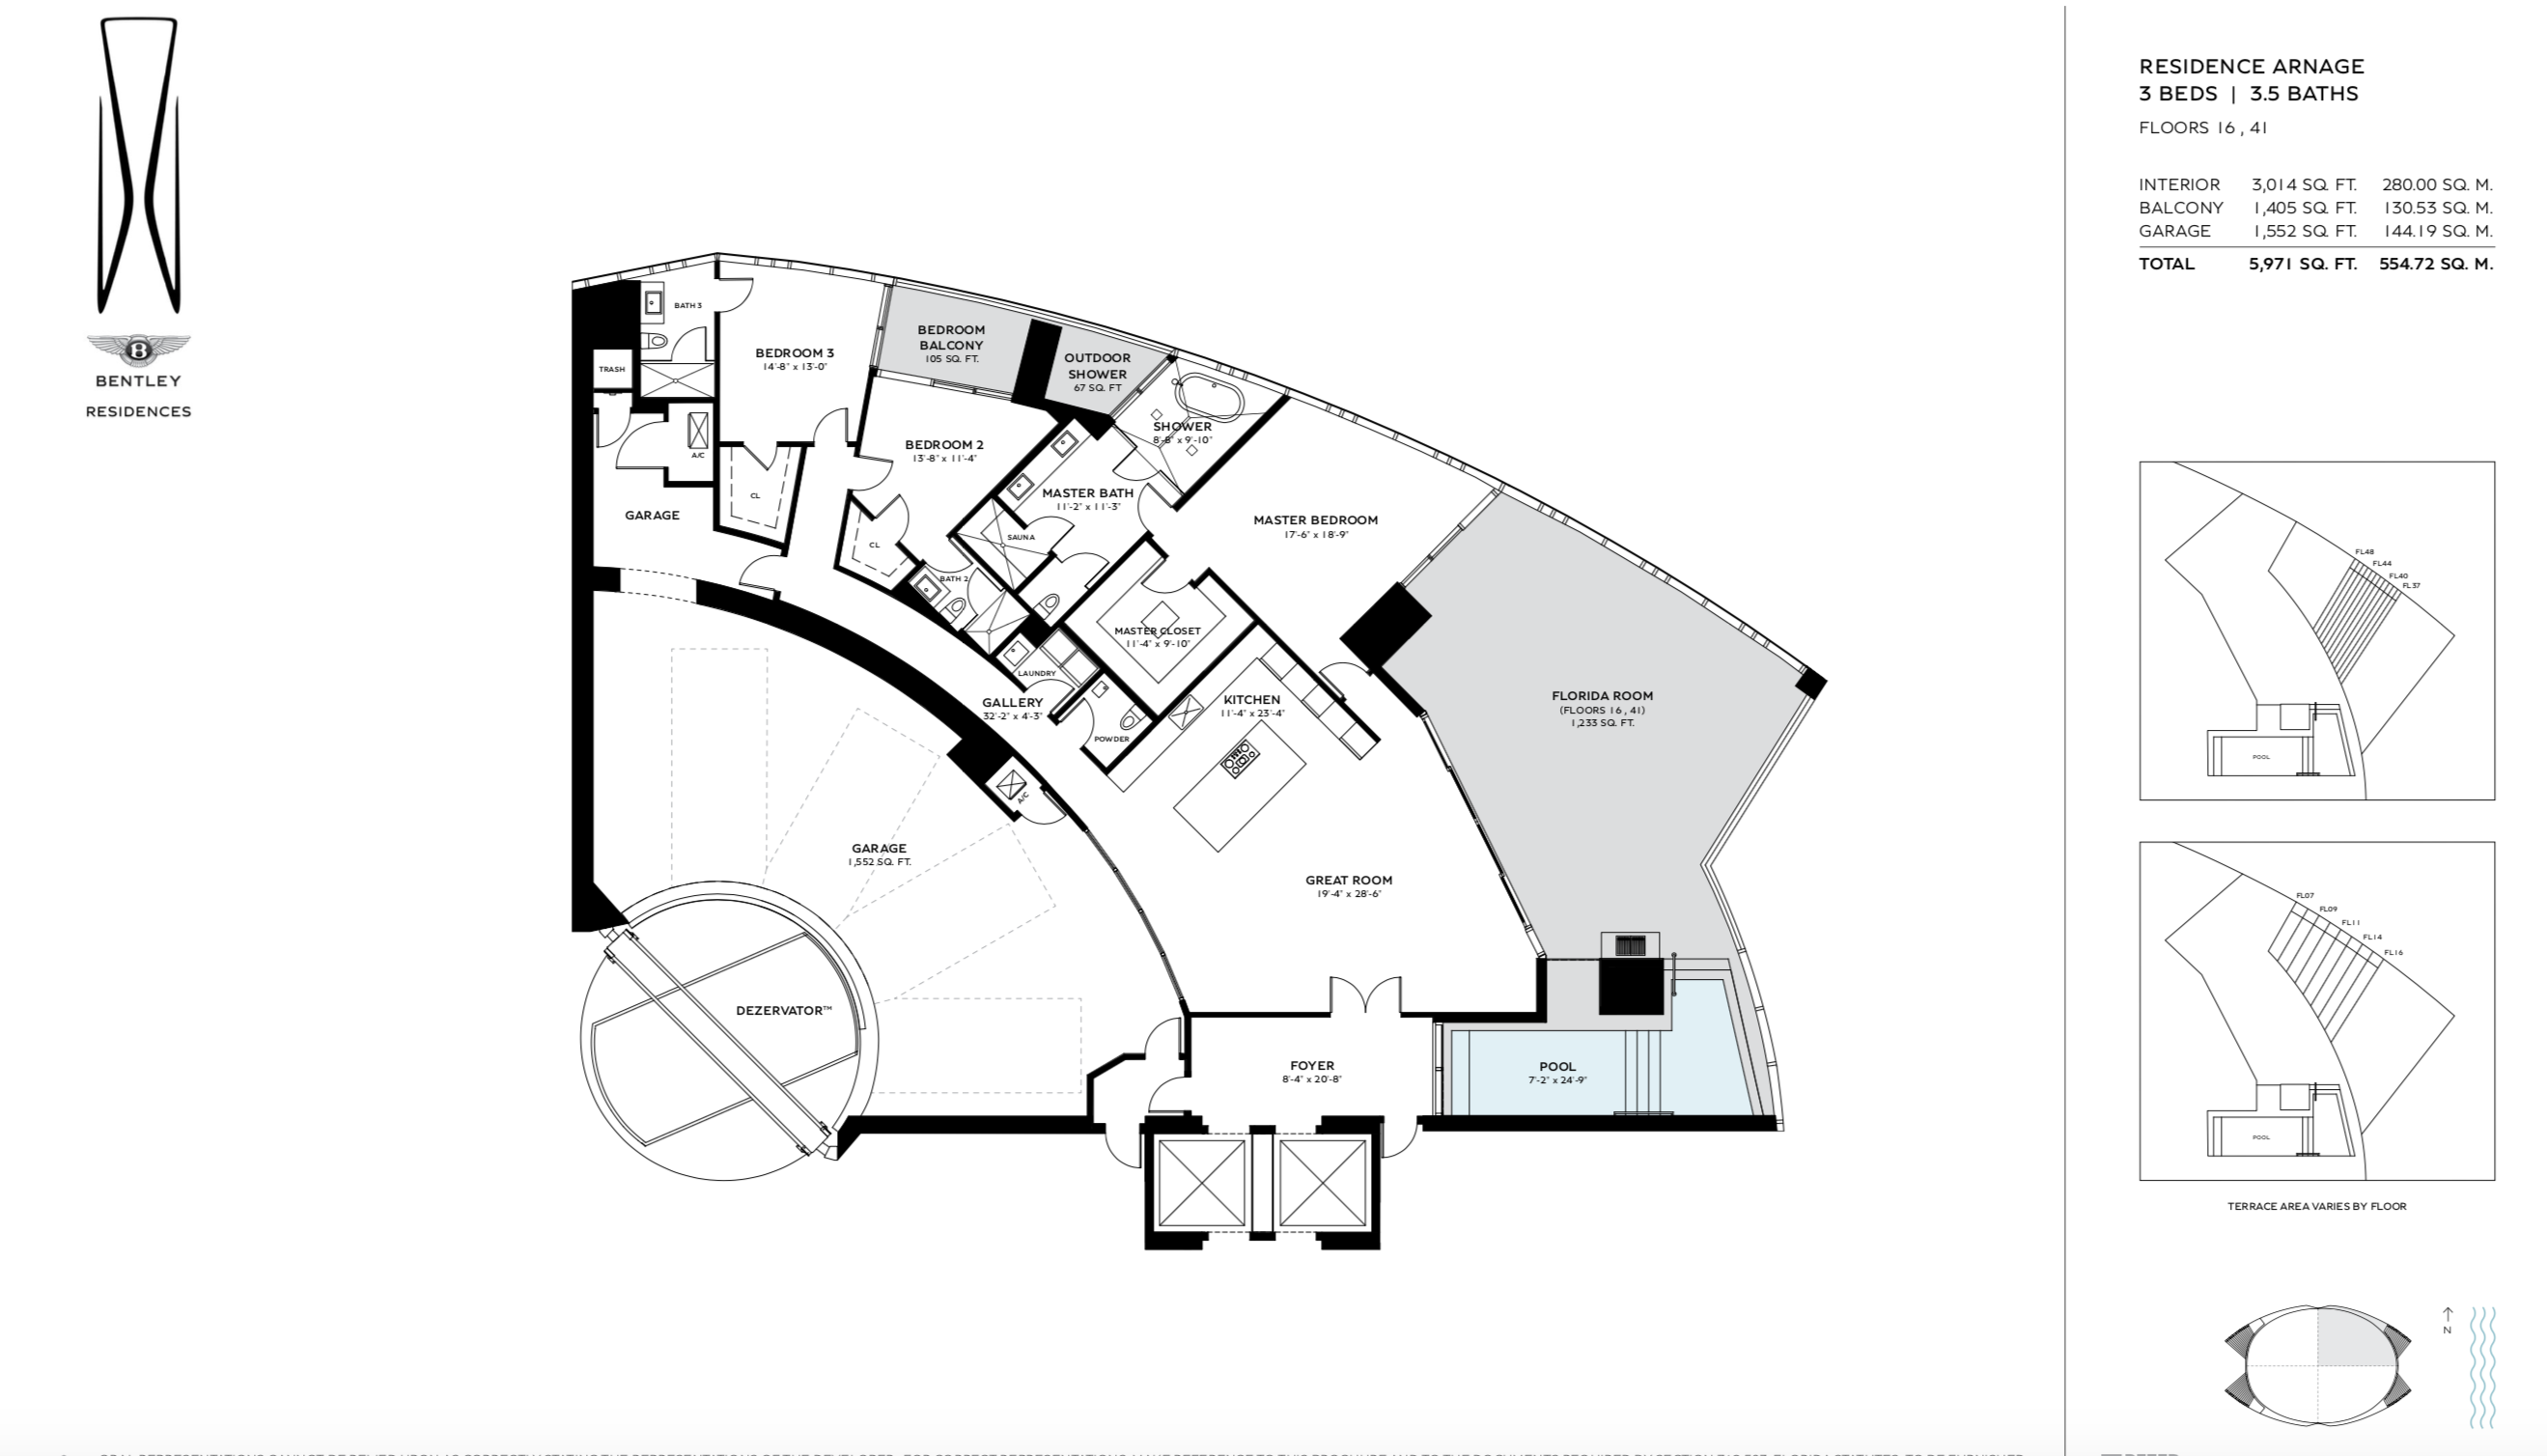 Bentley Residences Sunny Isles  | Residence Arnage | NE Exposure | 3 Be/3.5Ba | 3,014 SF | Floors 16,41